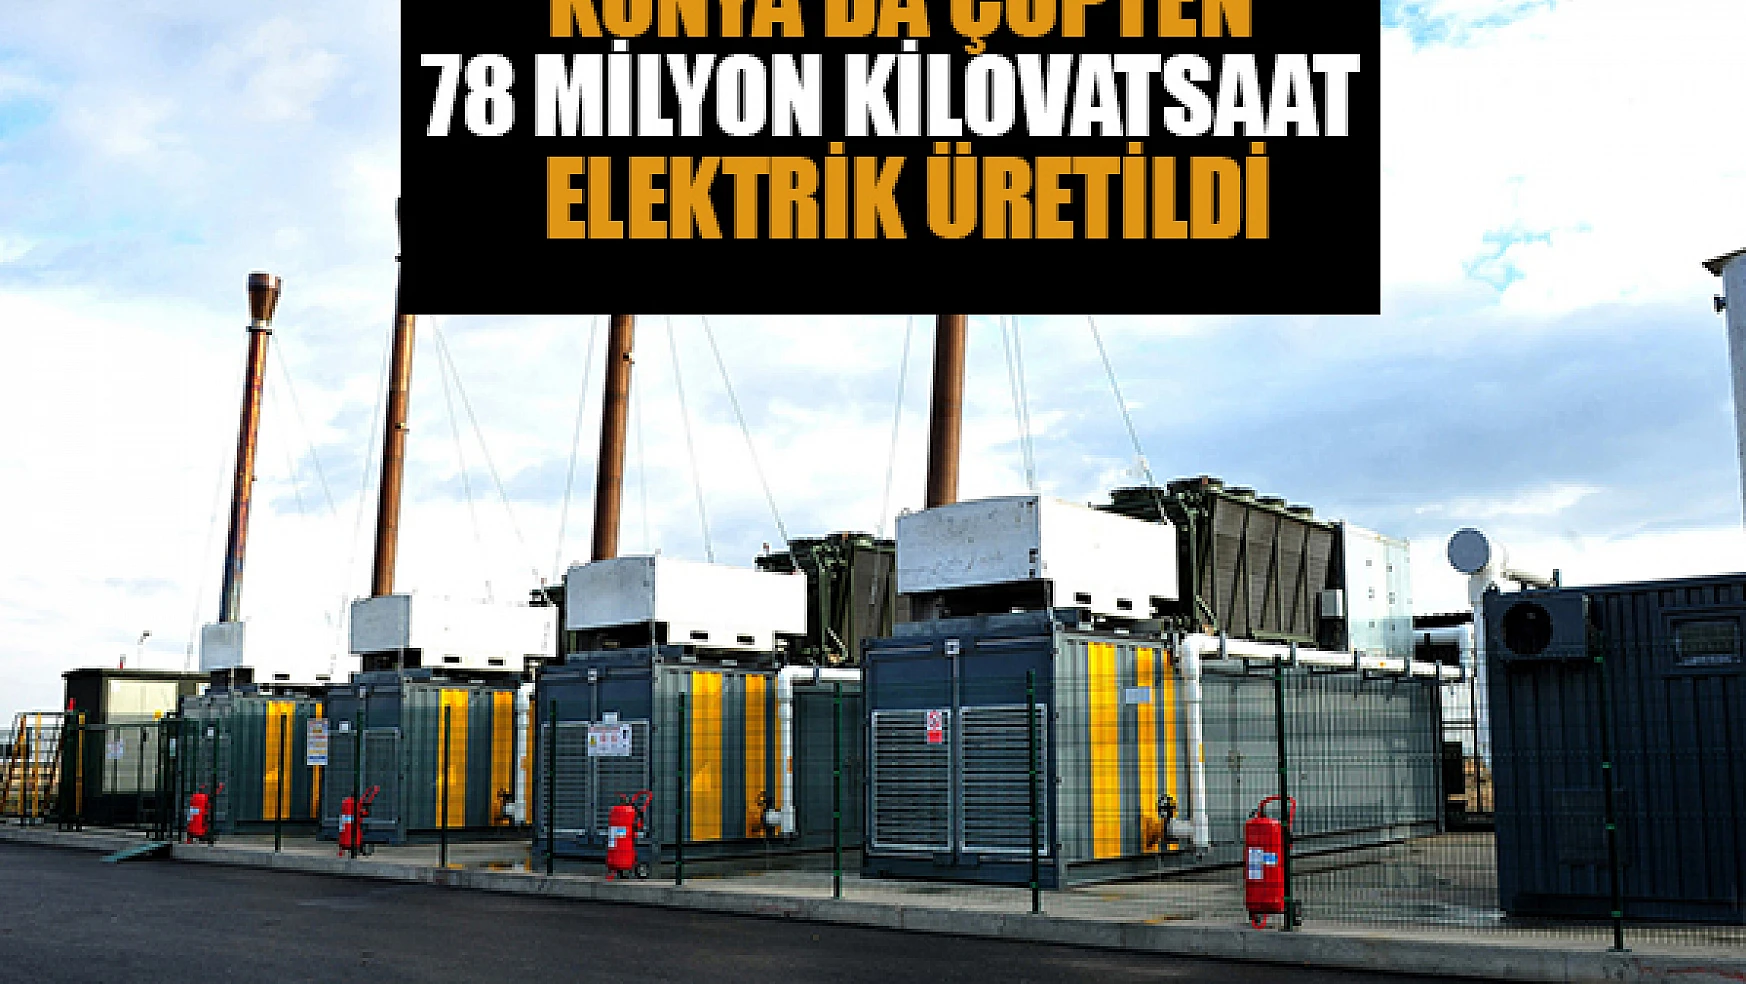 Konya'da çöpten 78 milyon kilovatsaat elektrik üretildi